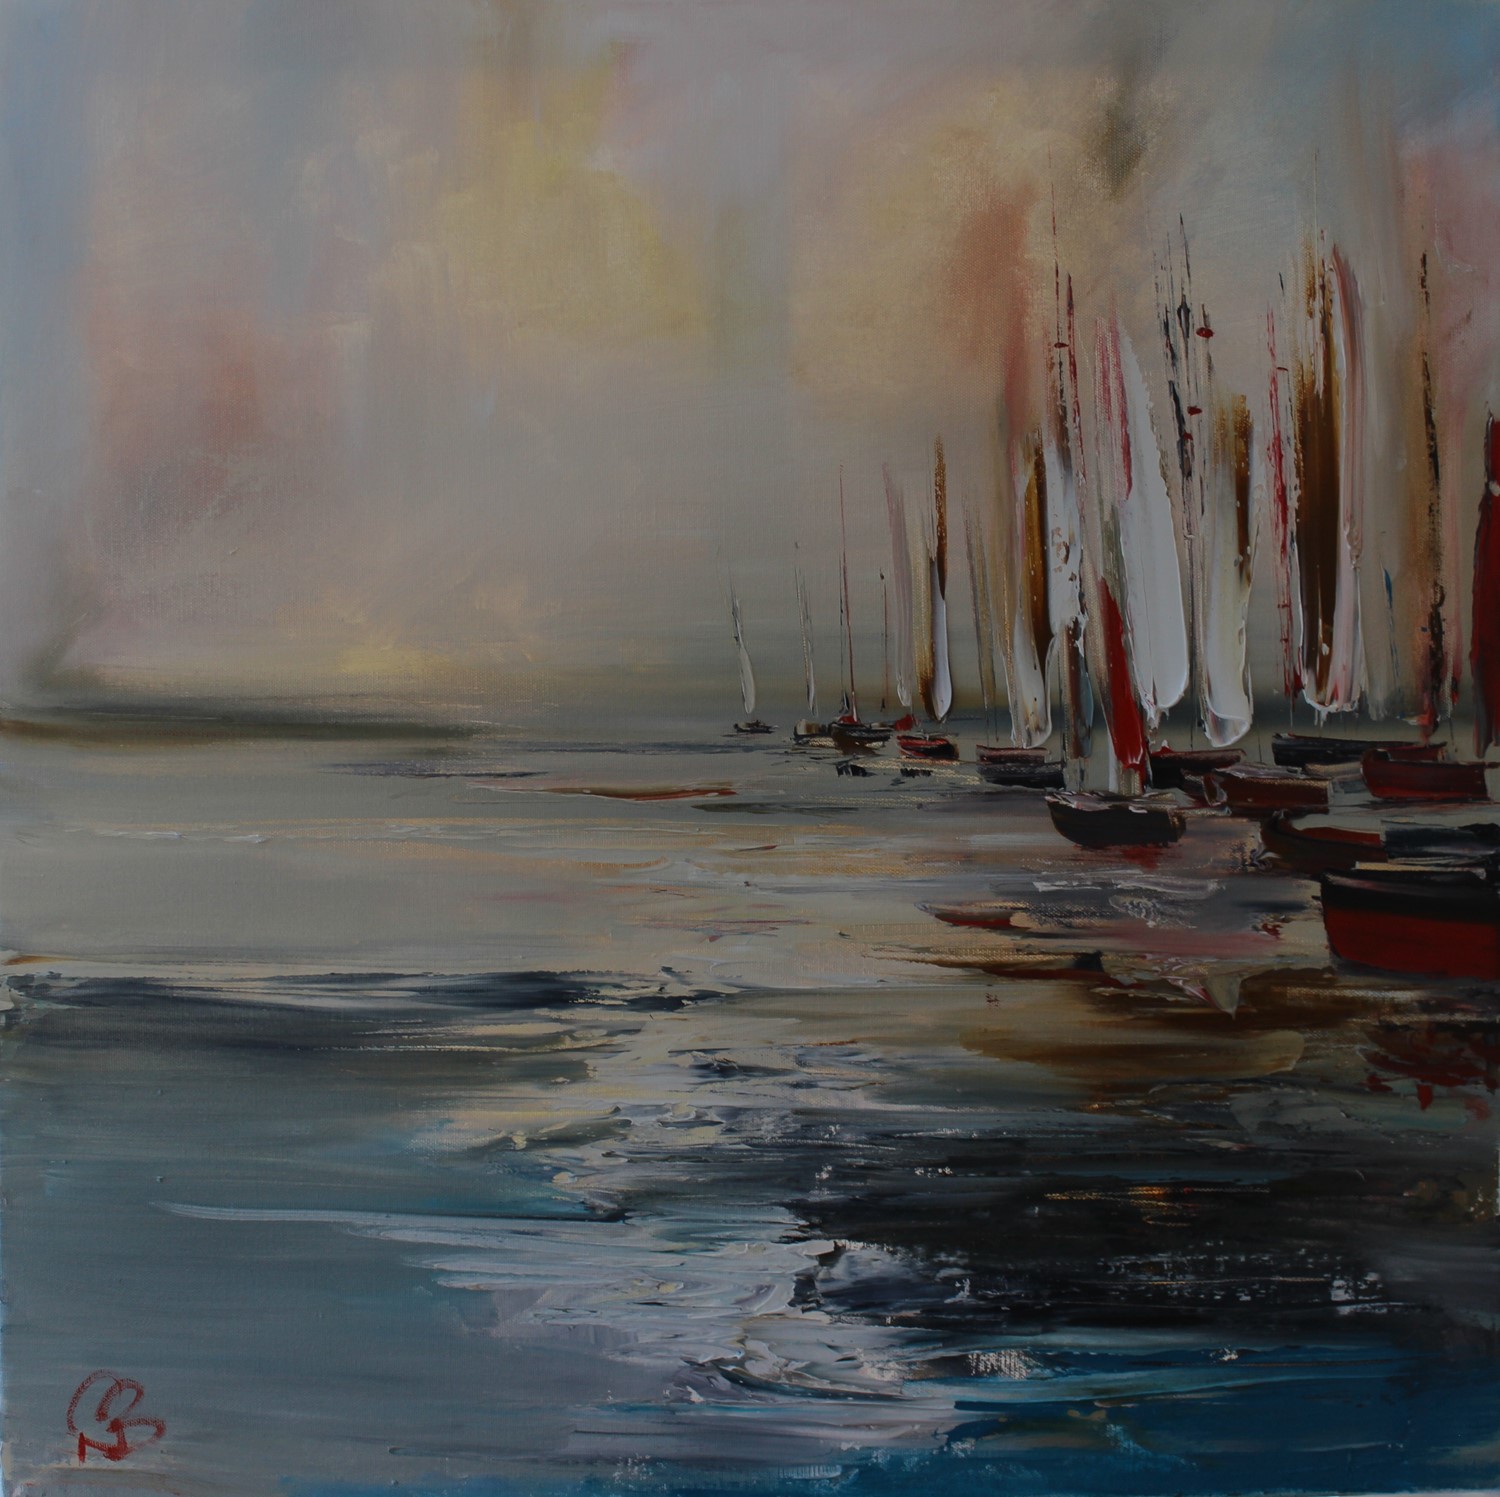 'A Fleet of Sails at Sea ' by artist Rosanne Barr